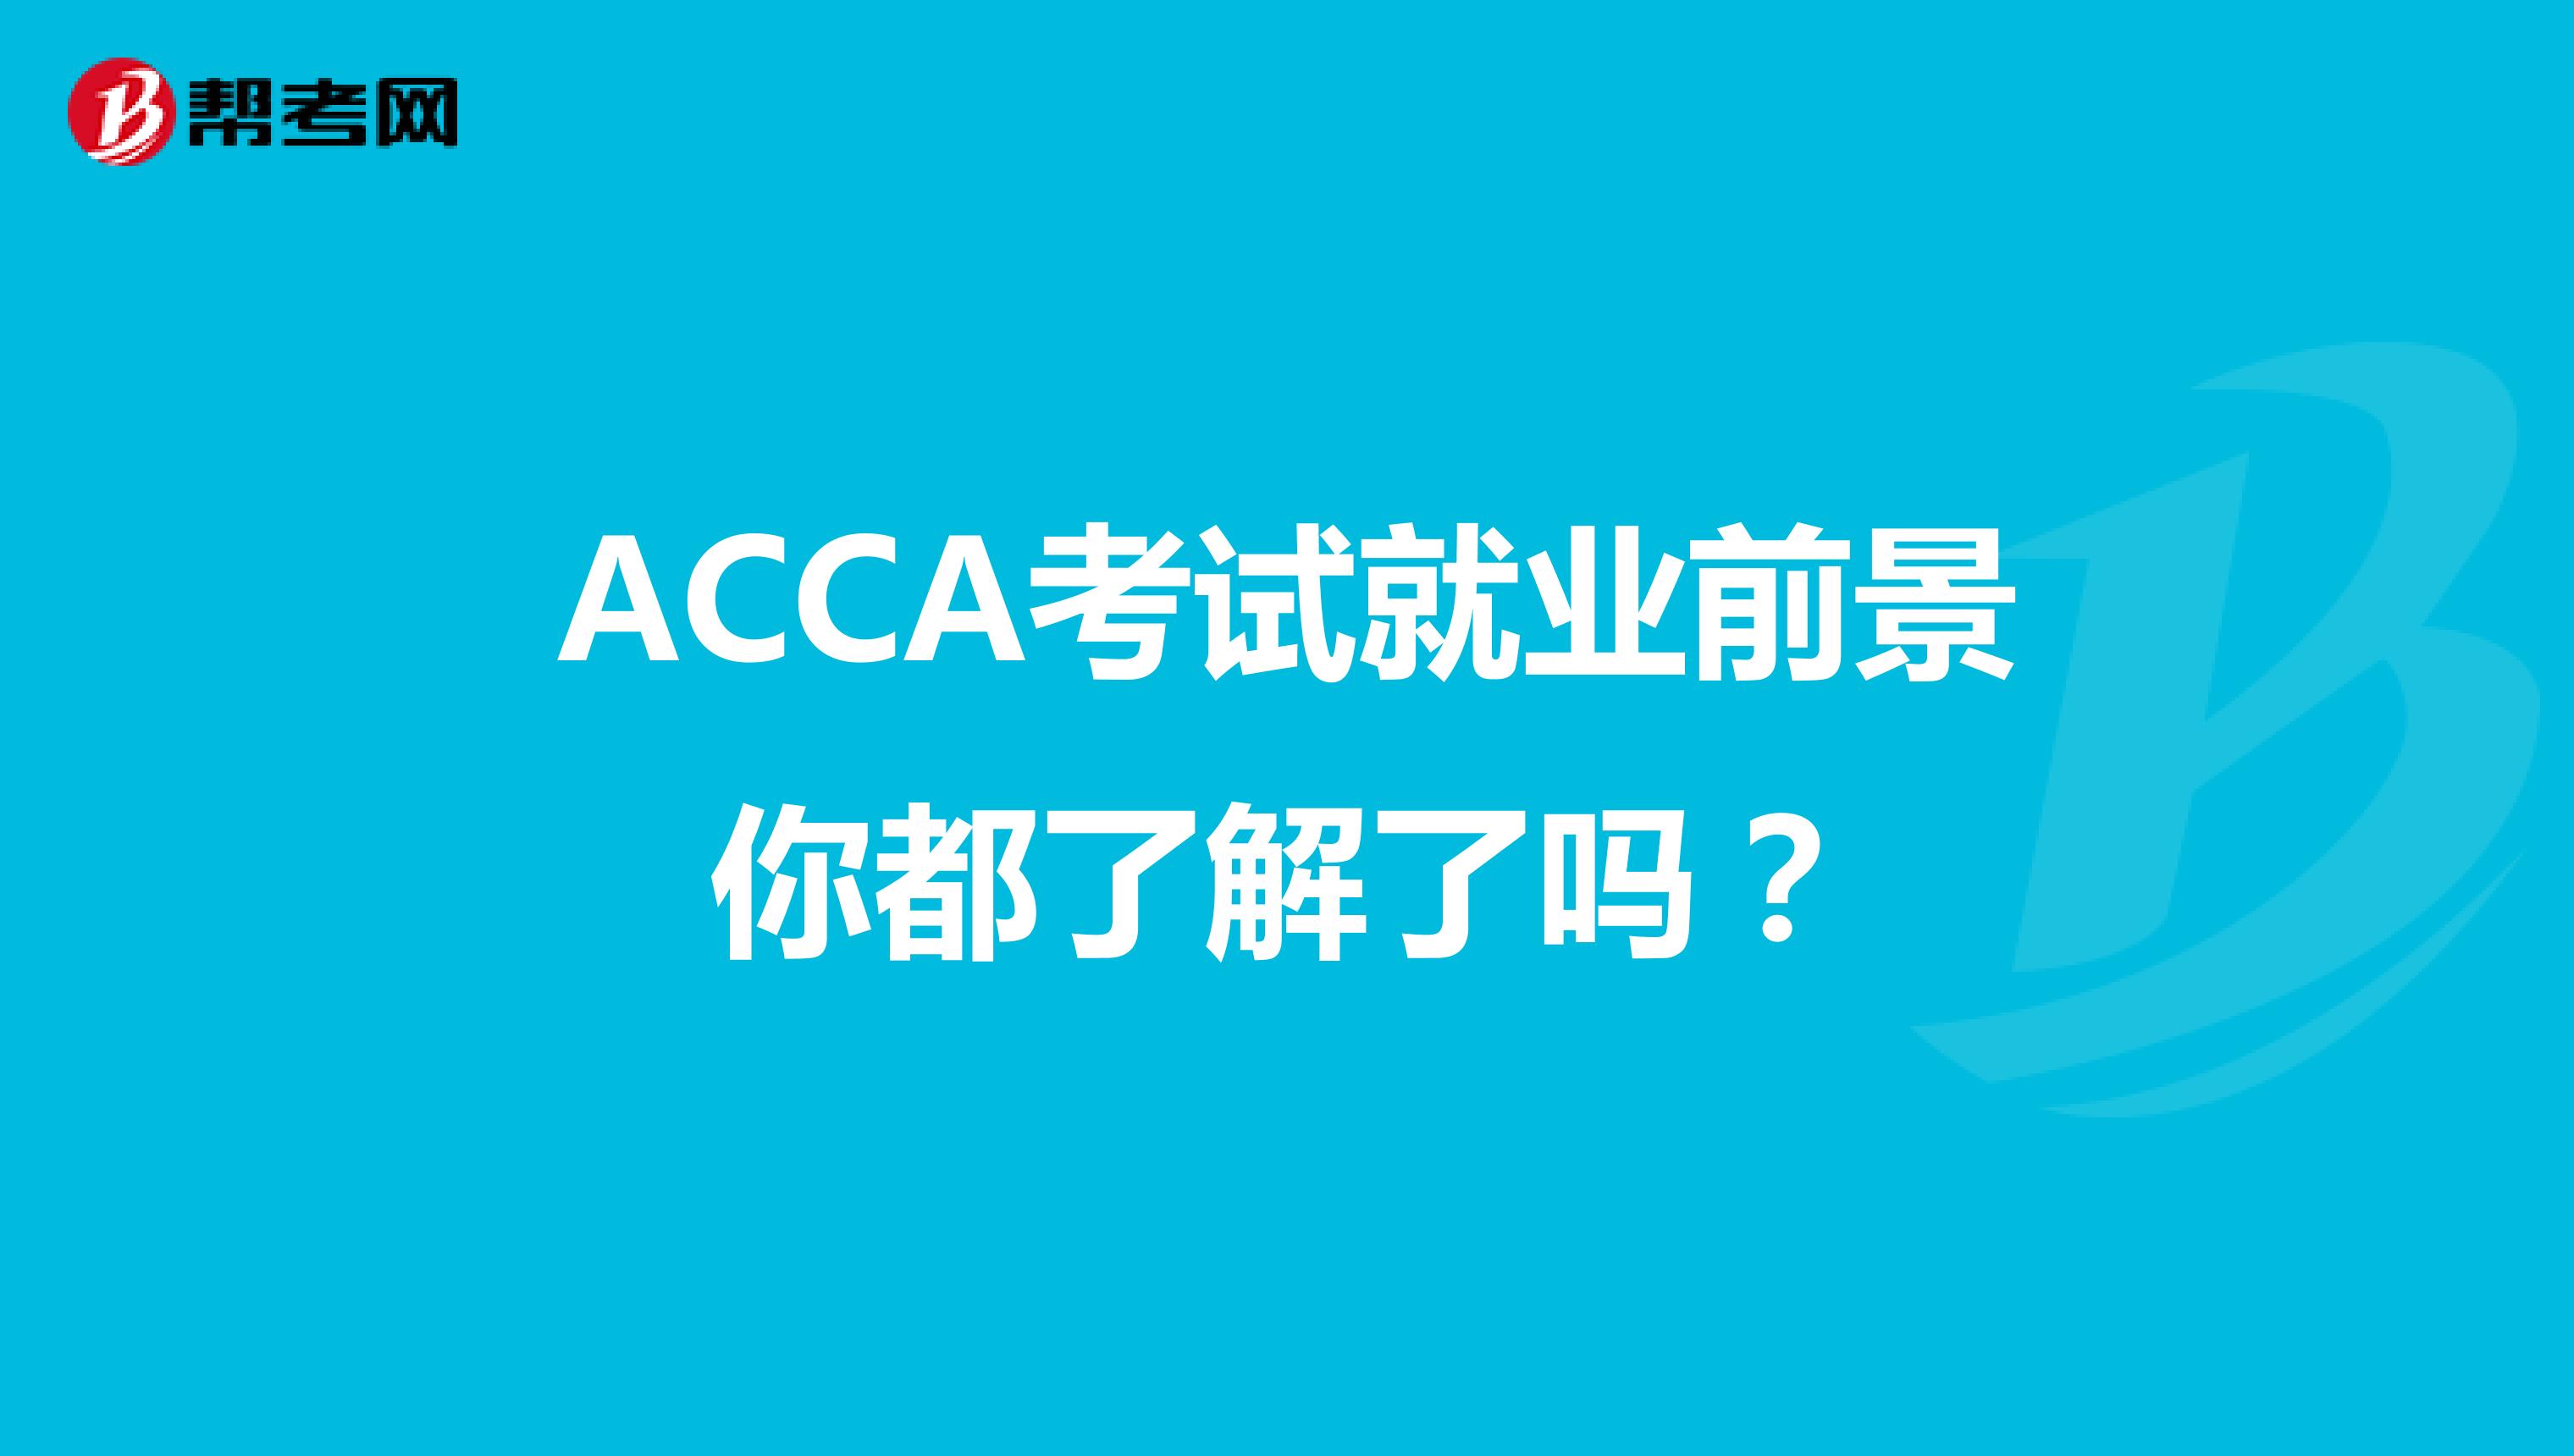 ACCA考试就业前景你都了解了吗？